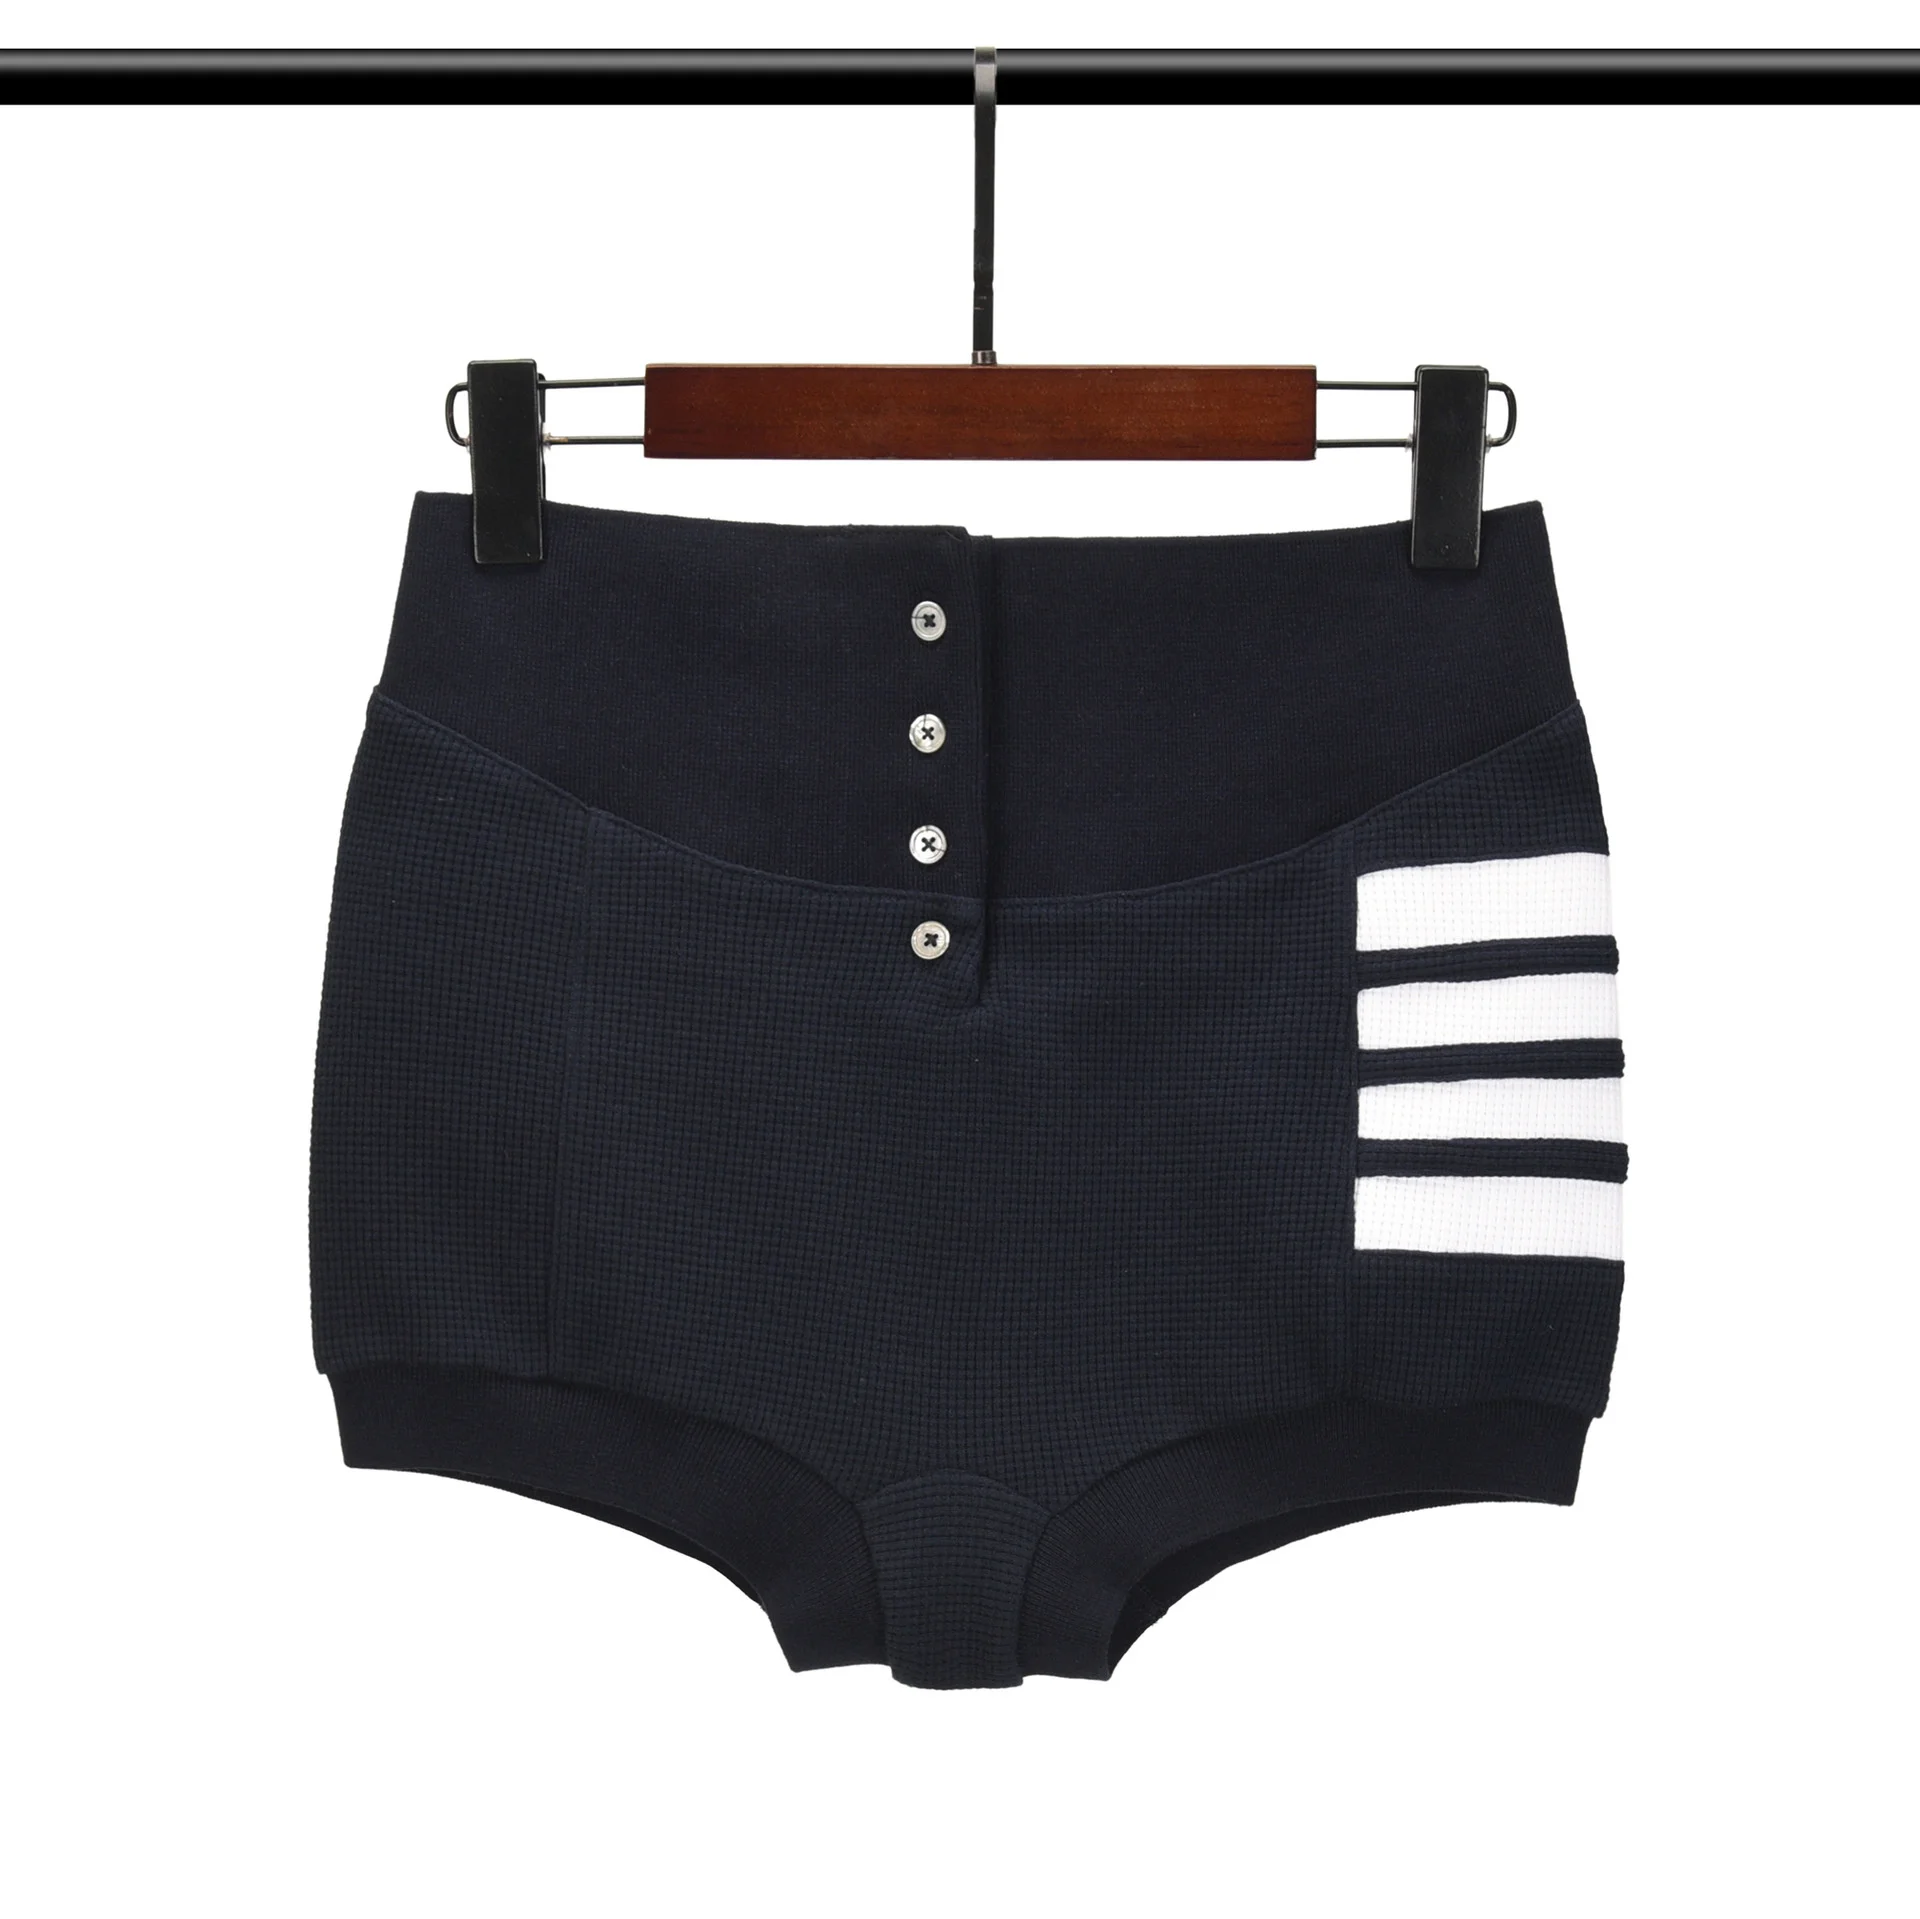 TB BROWIN Summer Women High Waist Walfe Hot Pants Short Beach Wear Yoga Shorts Striped Korean Design HIgh Quality